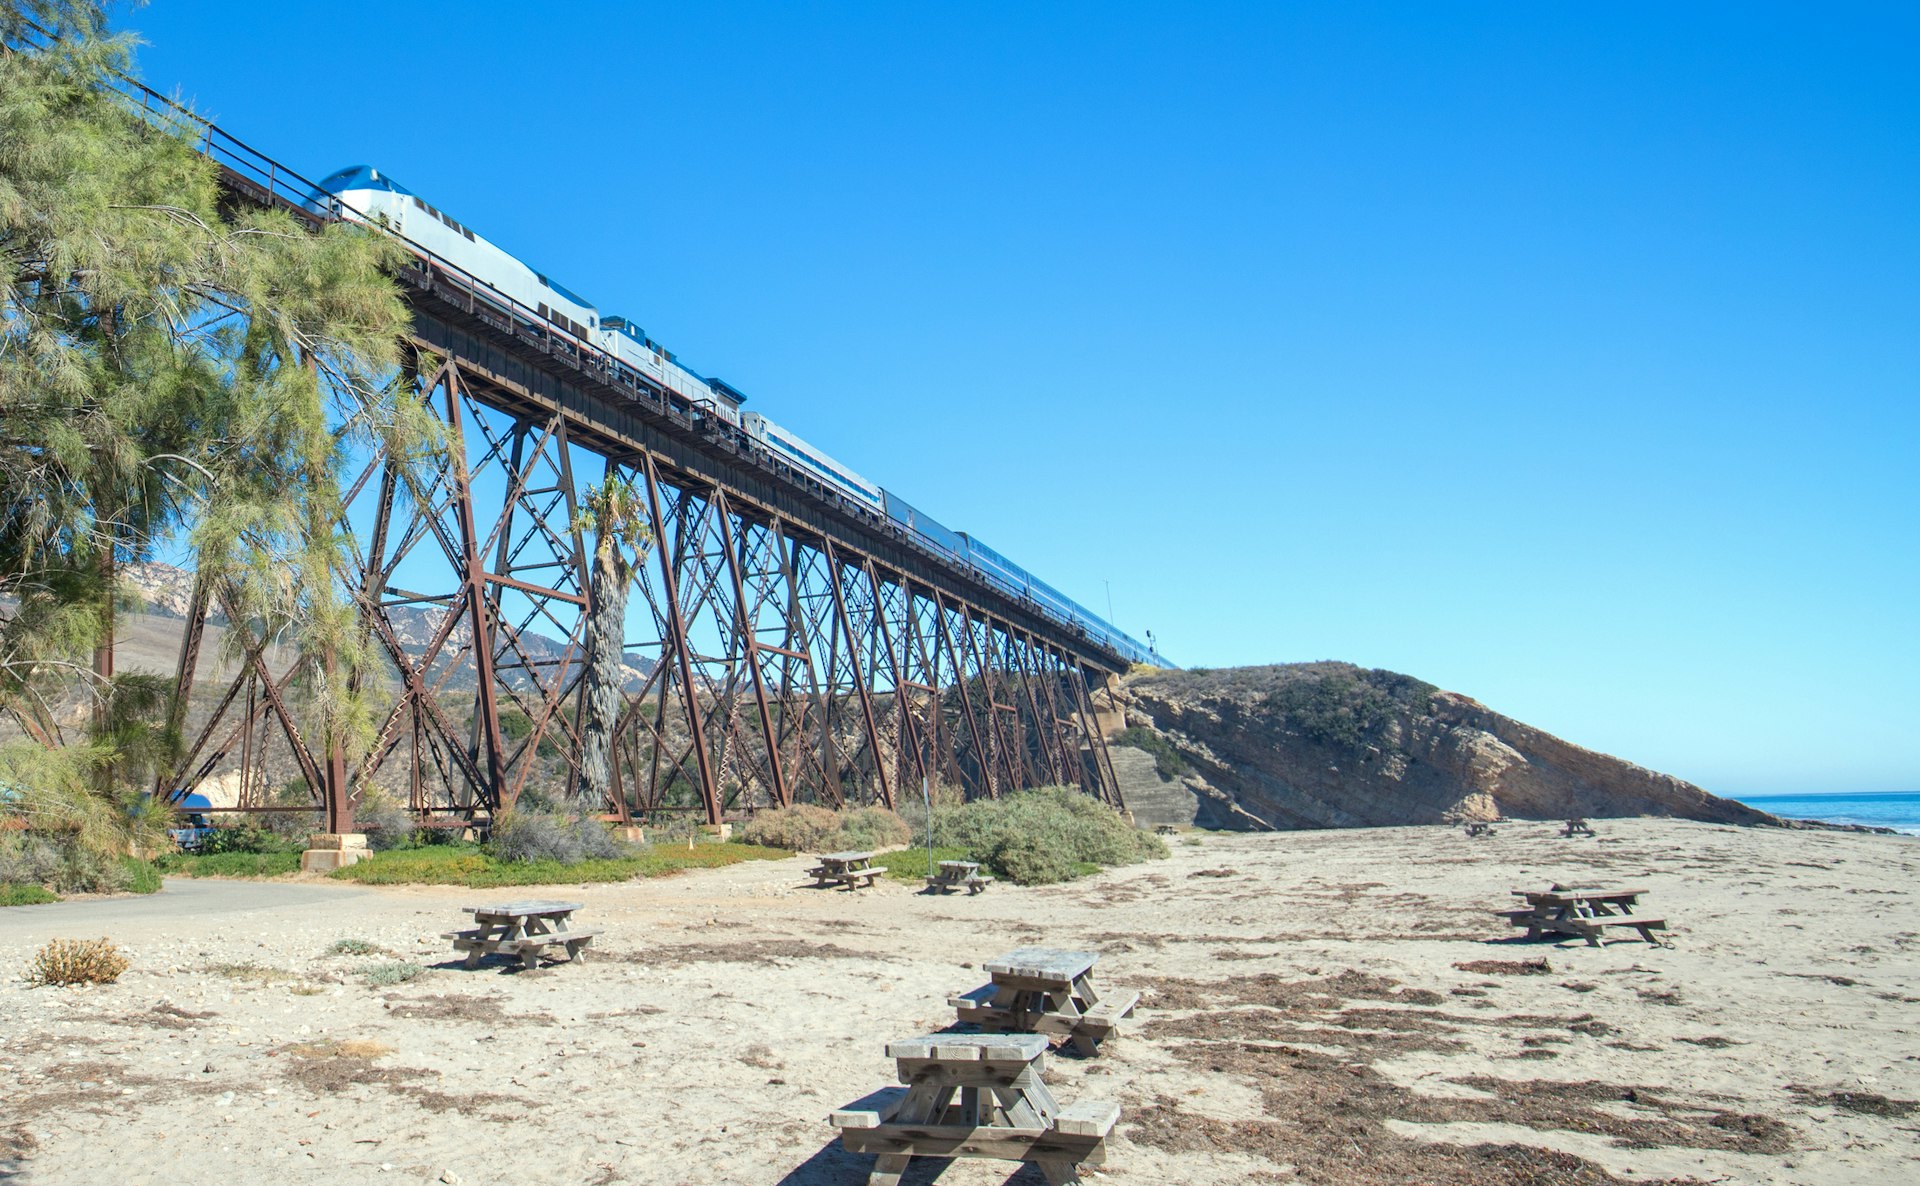 Train traveling over a railroad track bridge that rises high above a beach